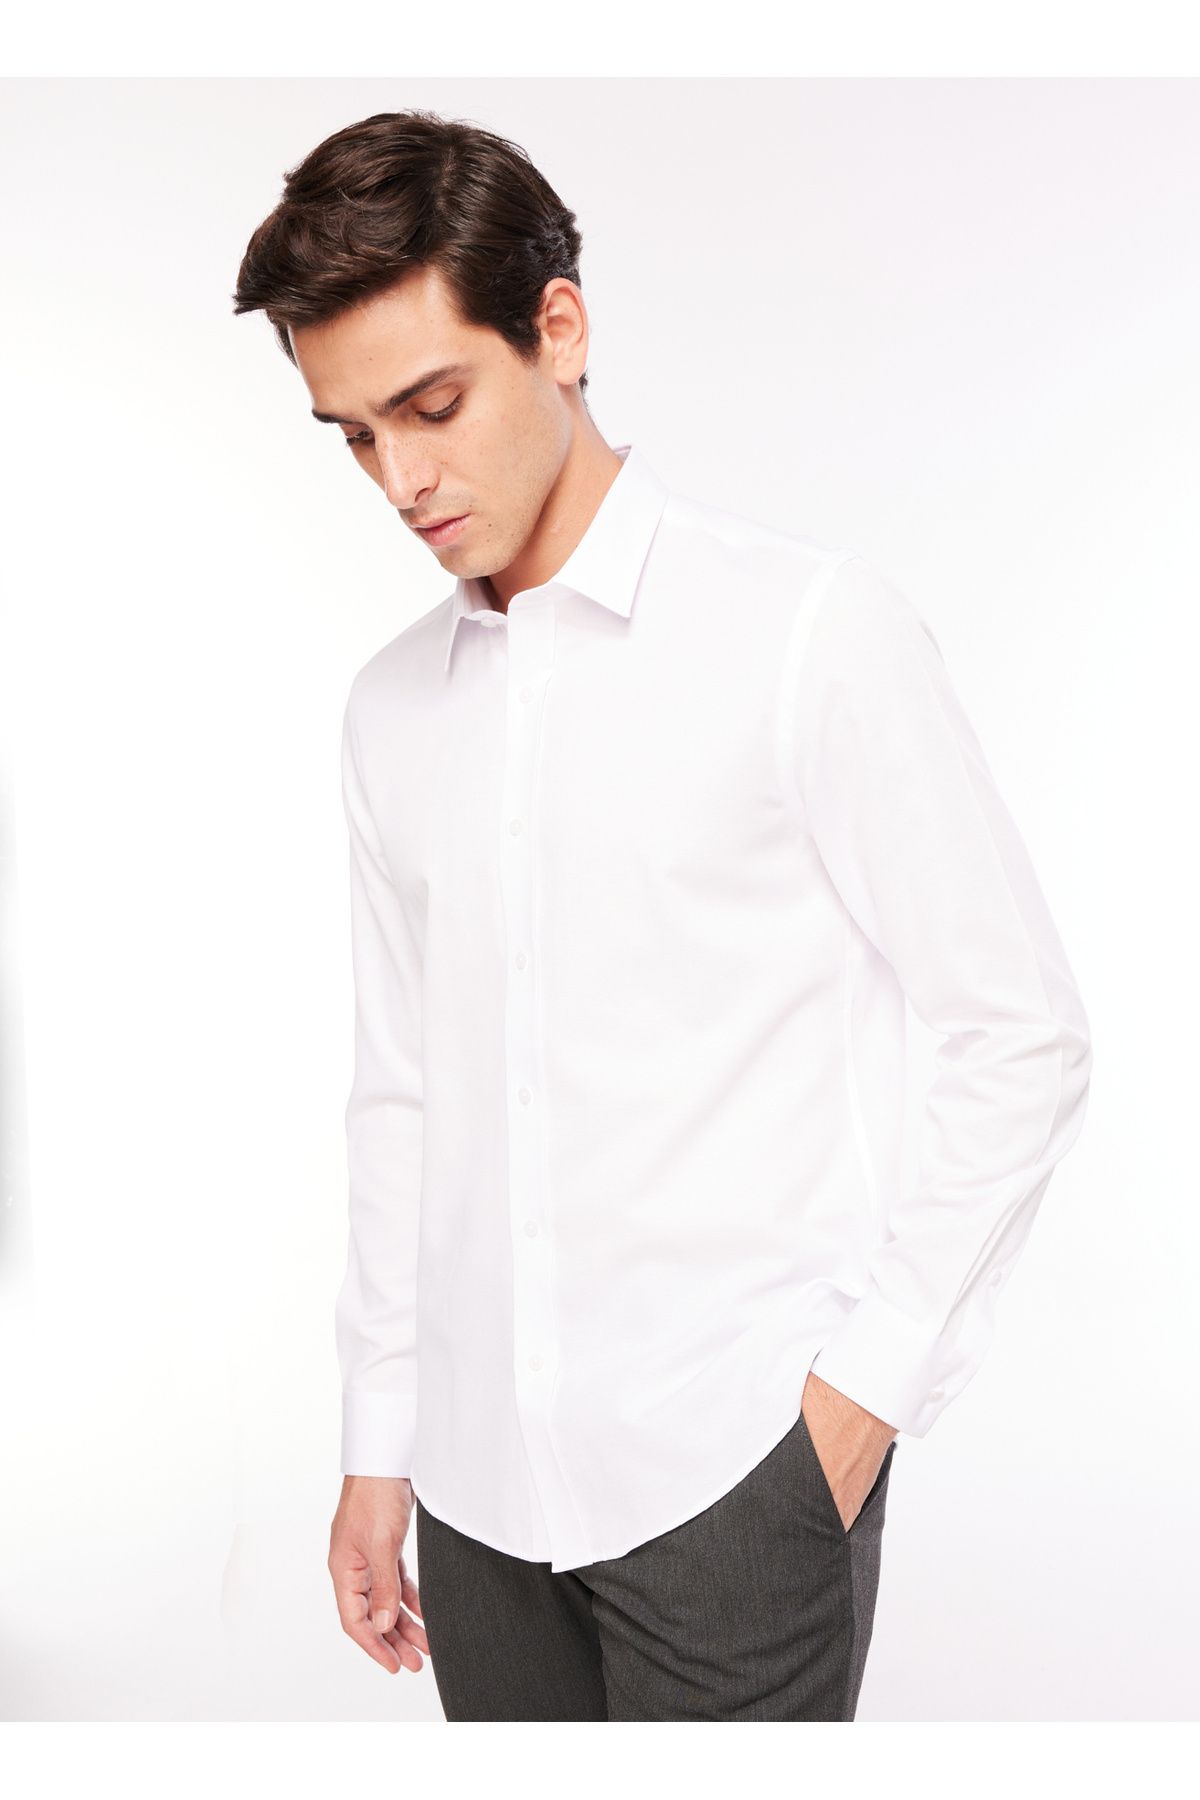 Fabrika Slim Fit Gömlek Yaka Armürlü Beyaz Erkek Gömlek MAYDOS 92 CEPSIZ BLN